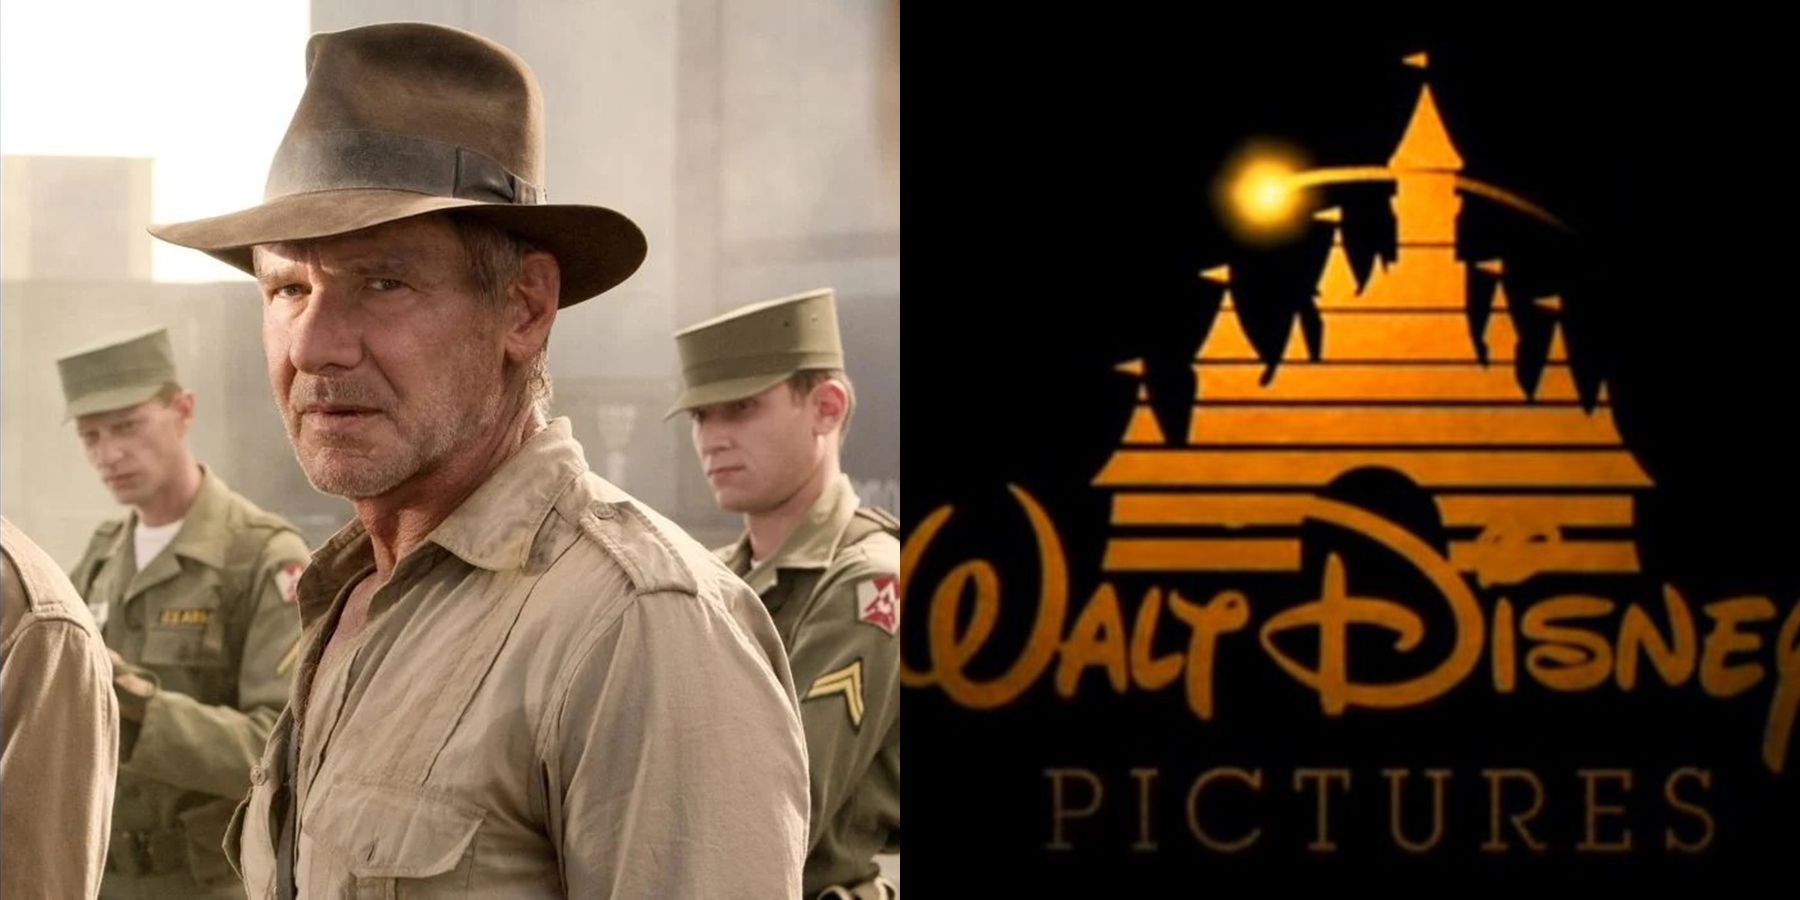 Disney's Indiana Jones 5 Release Strategy Backfired On Rotten Tomatoes